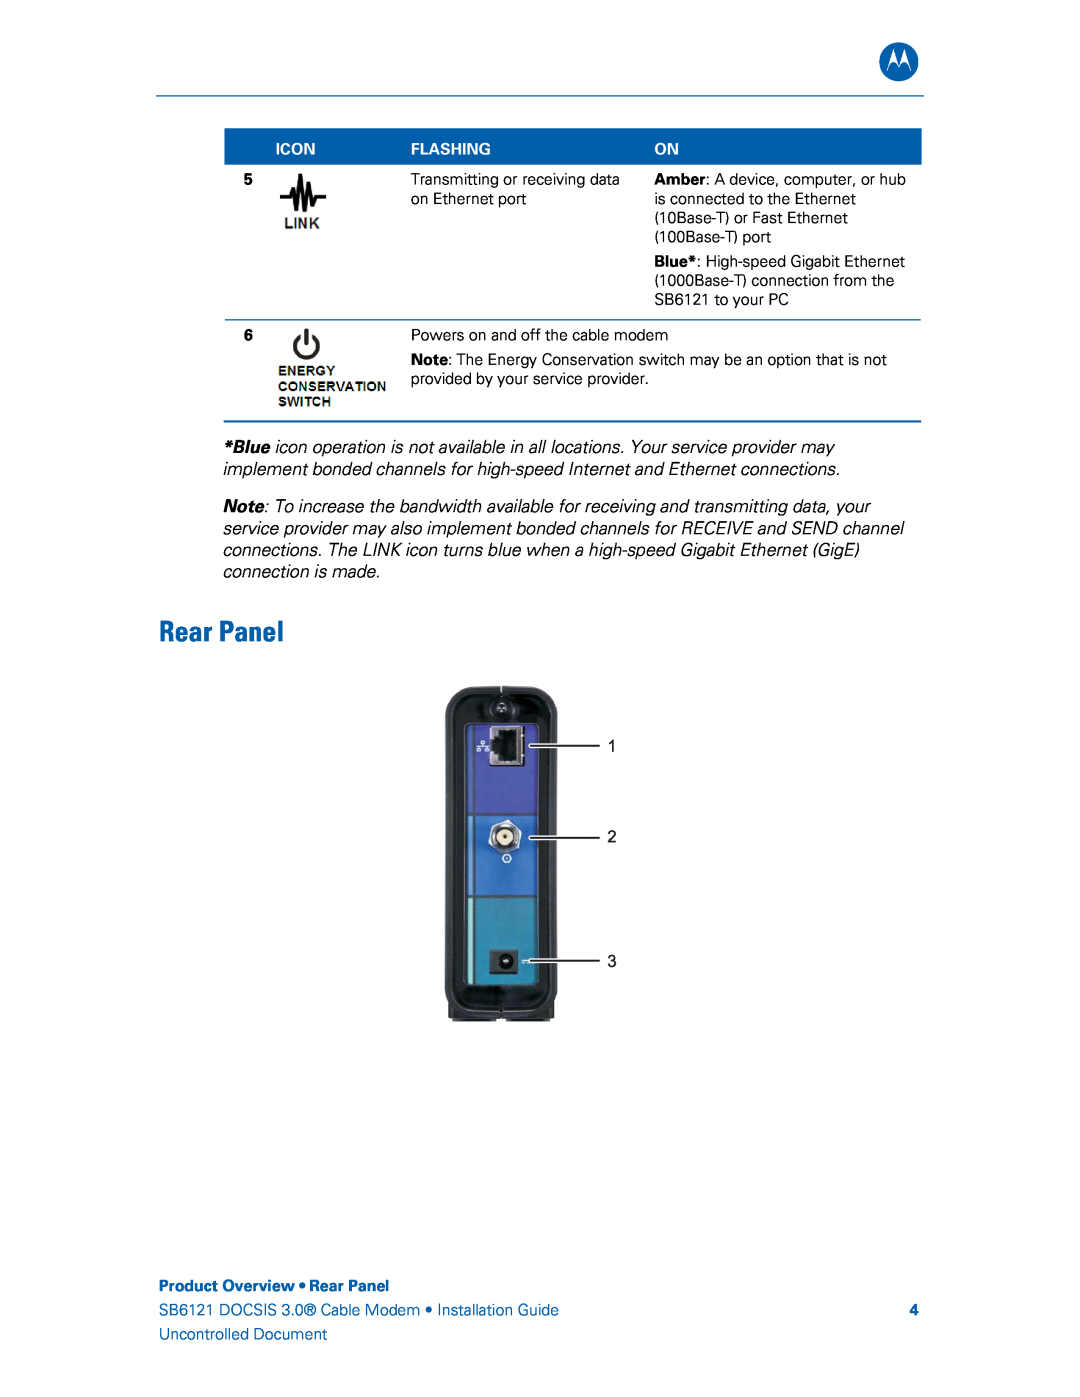 Motorola SB6121, 575319-019-00 manual Product Overview Rear Panel 